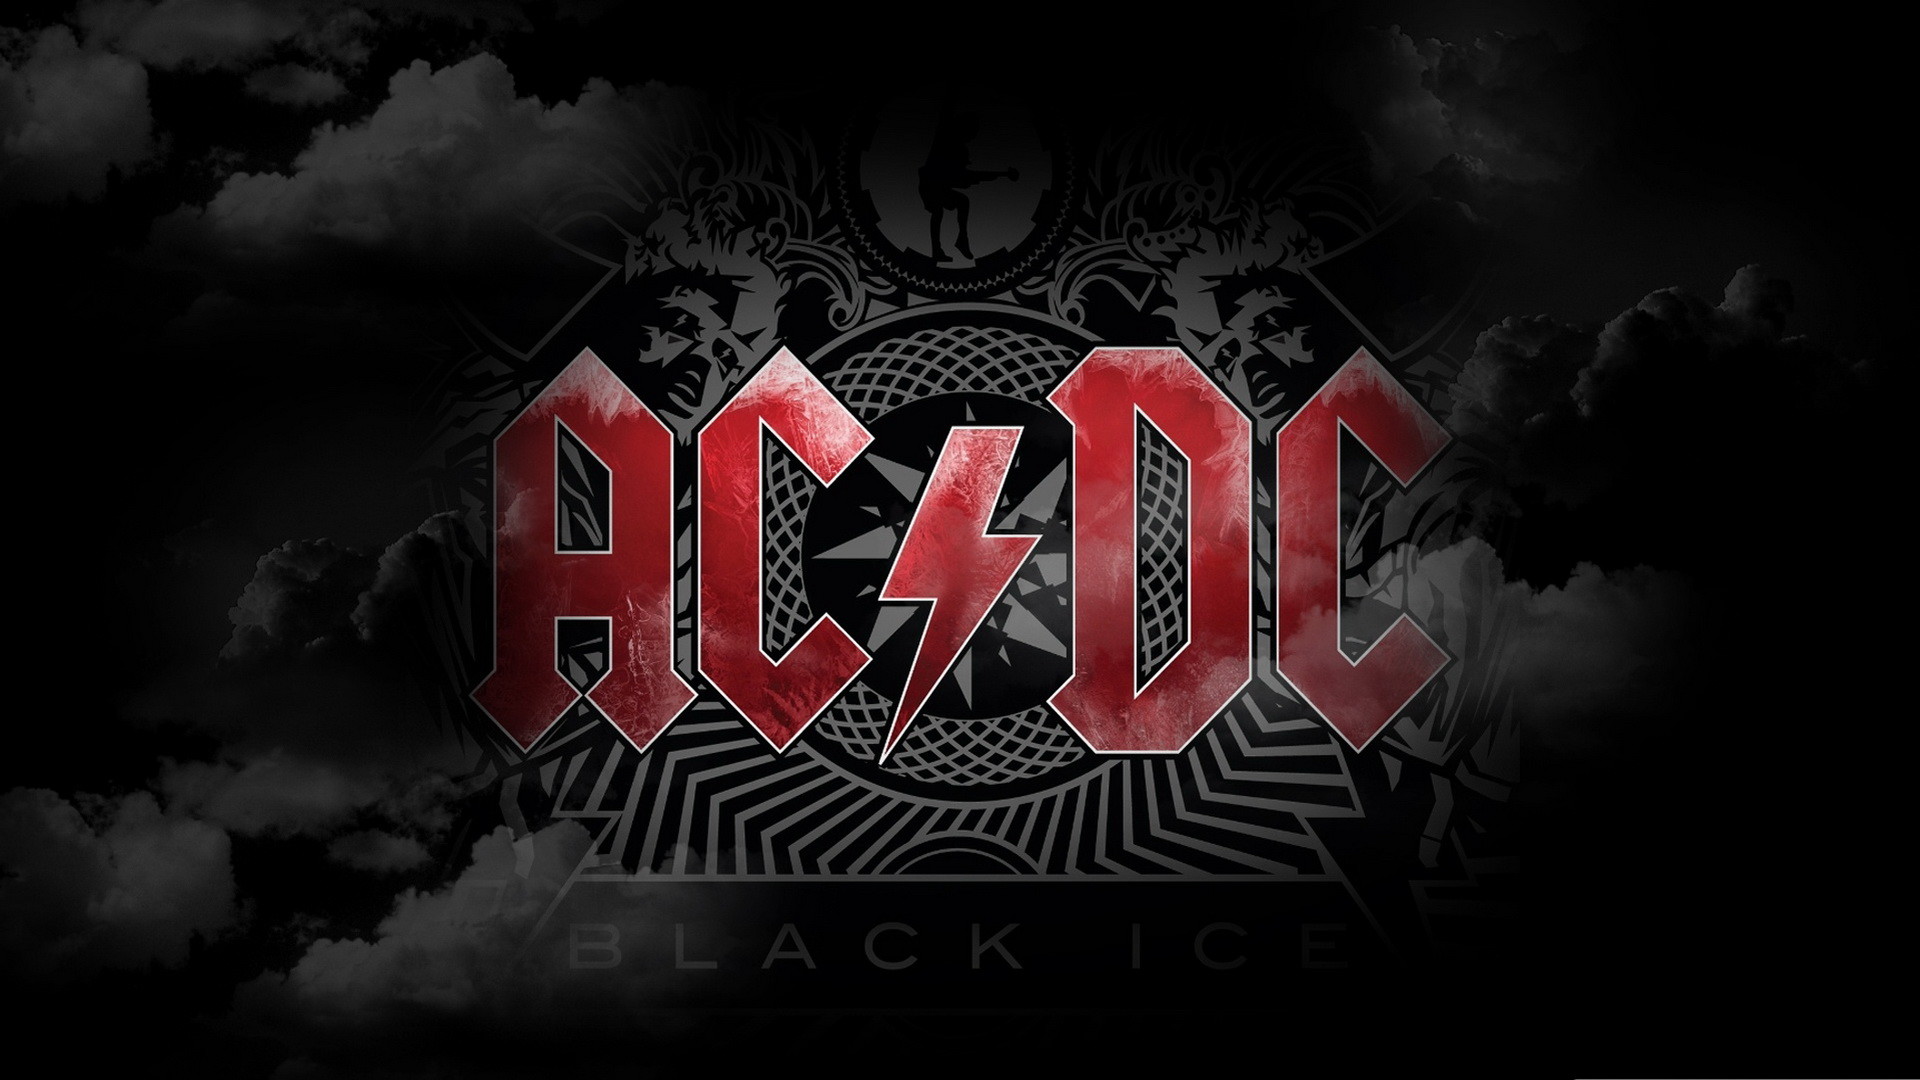 1920x1080 AC/DC ac dc acdc heavy metal hard rock classic bands groups entertainment  logo album